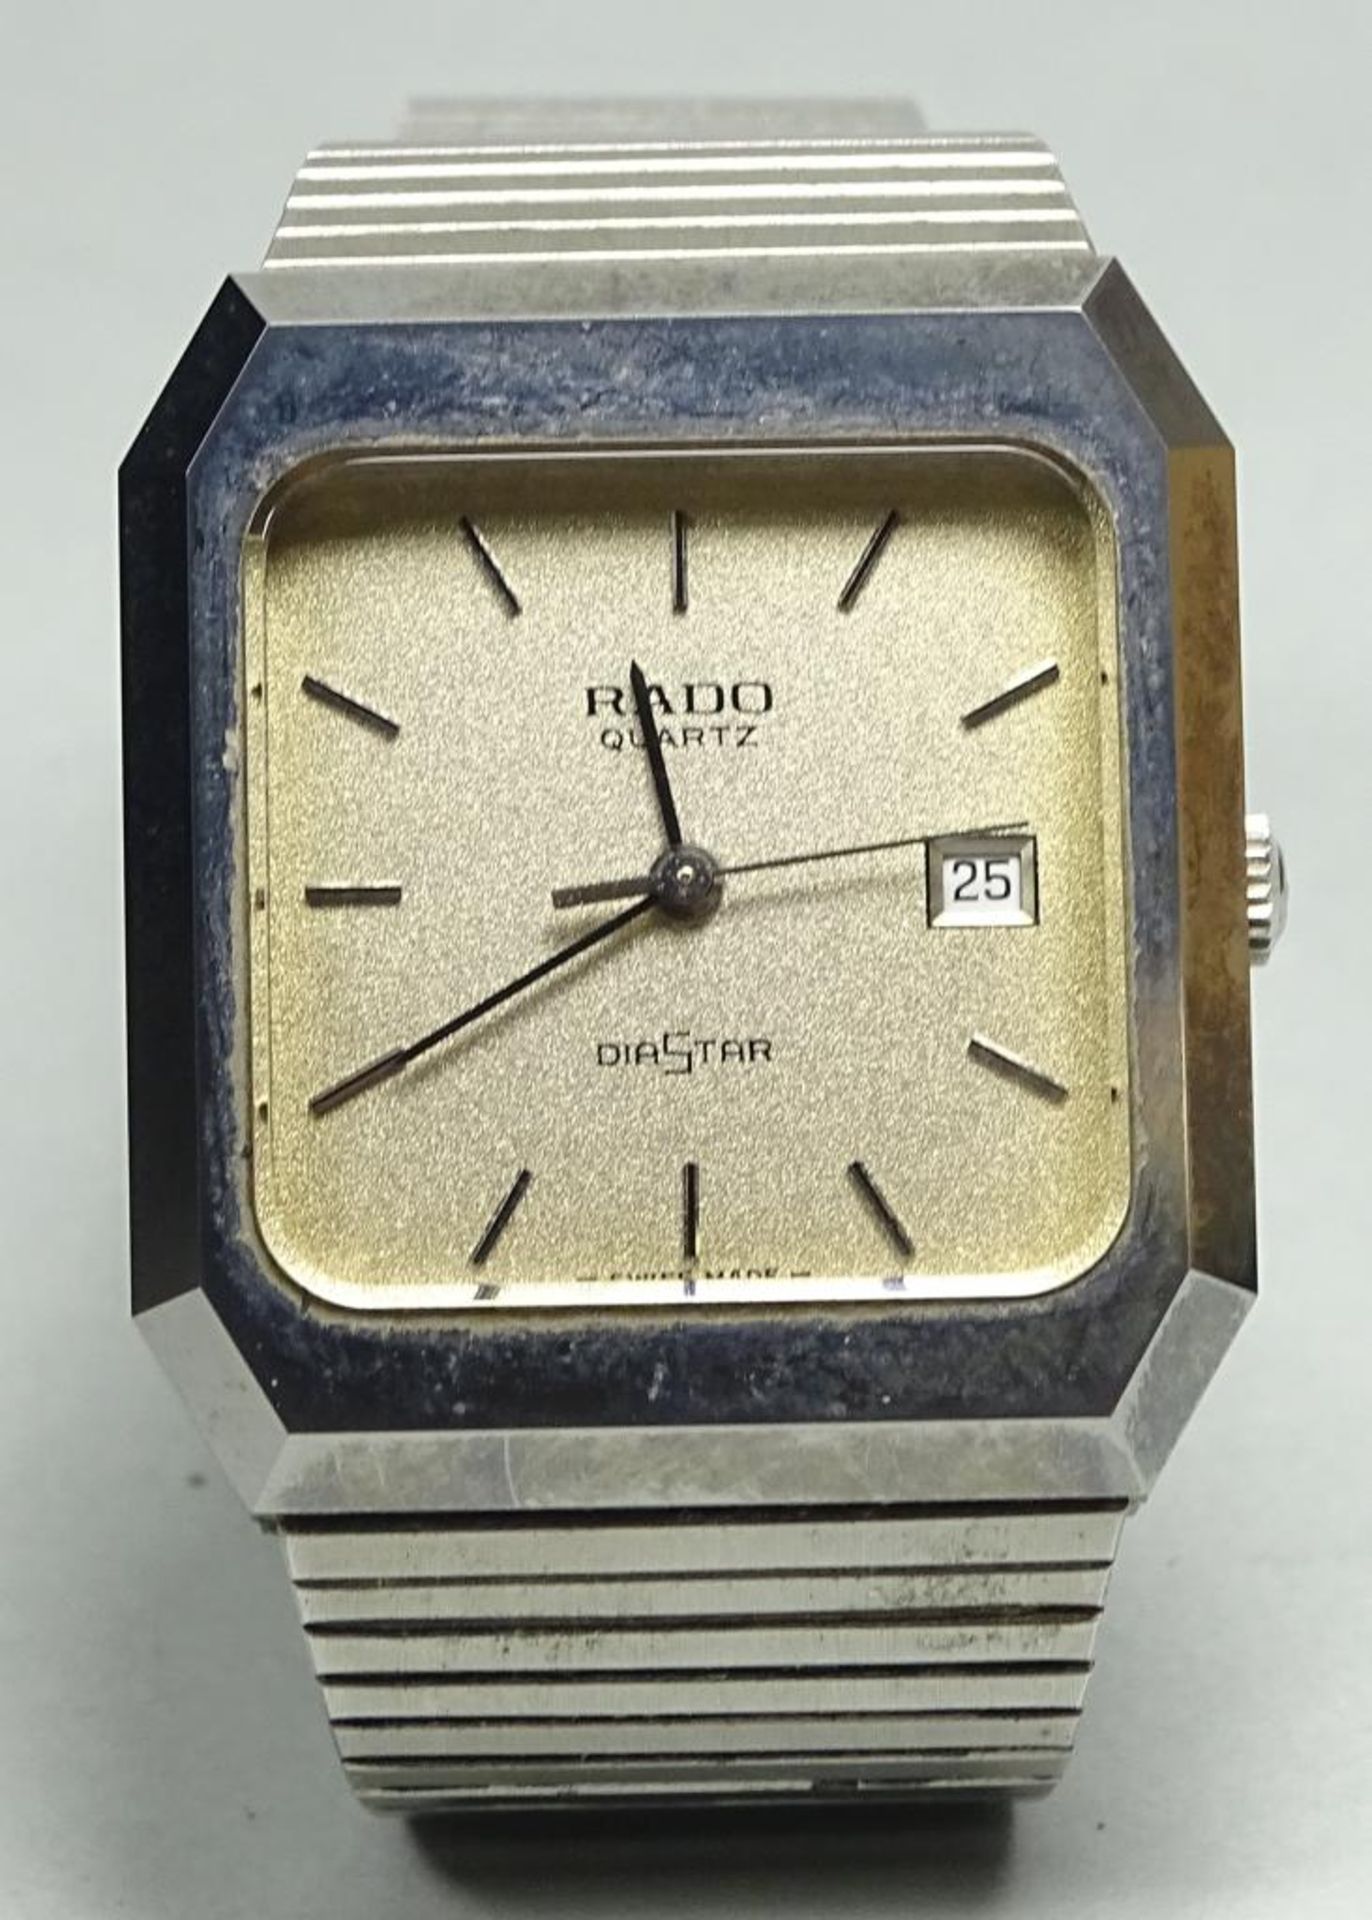 Armbanduhr "Rado-Diastar",Quartz,Saphirglas,Edelstahl,Gehäuse 31x29mm,Funktion nicht geteste